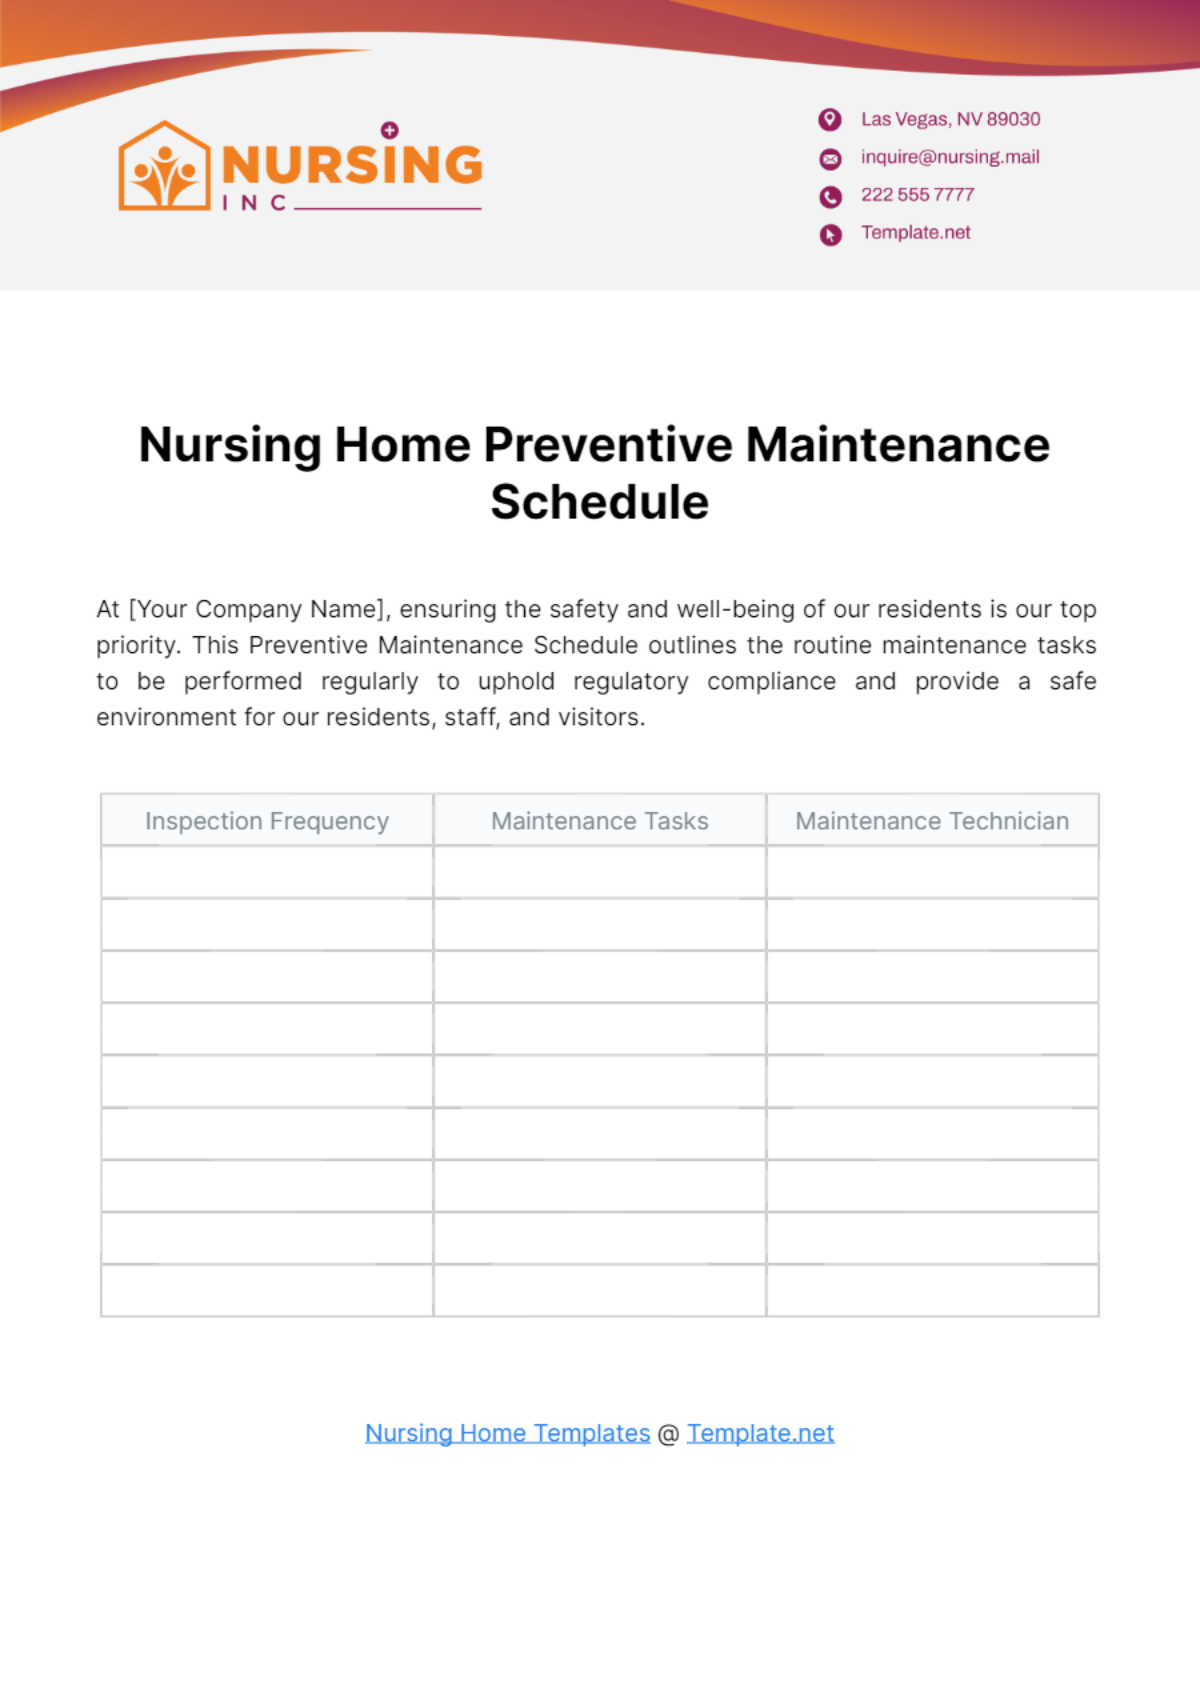 Nursing Home Preventive Maintenance Schedule Template